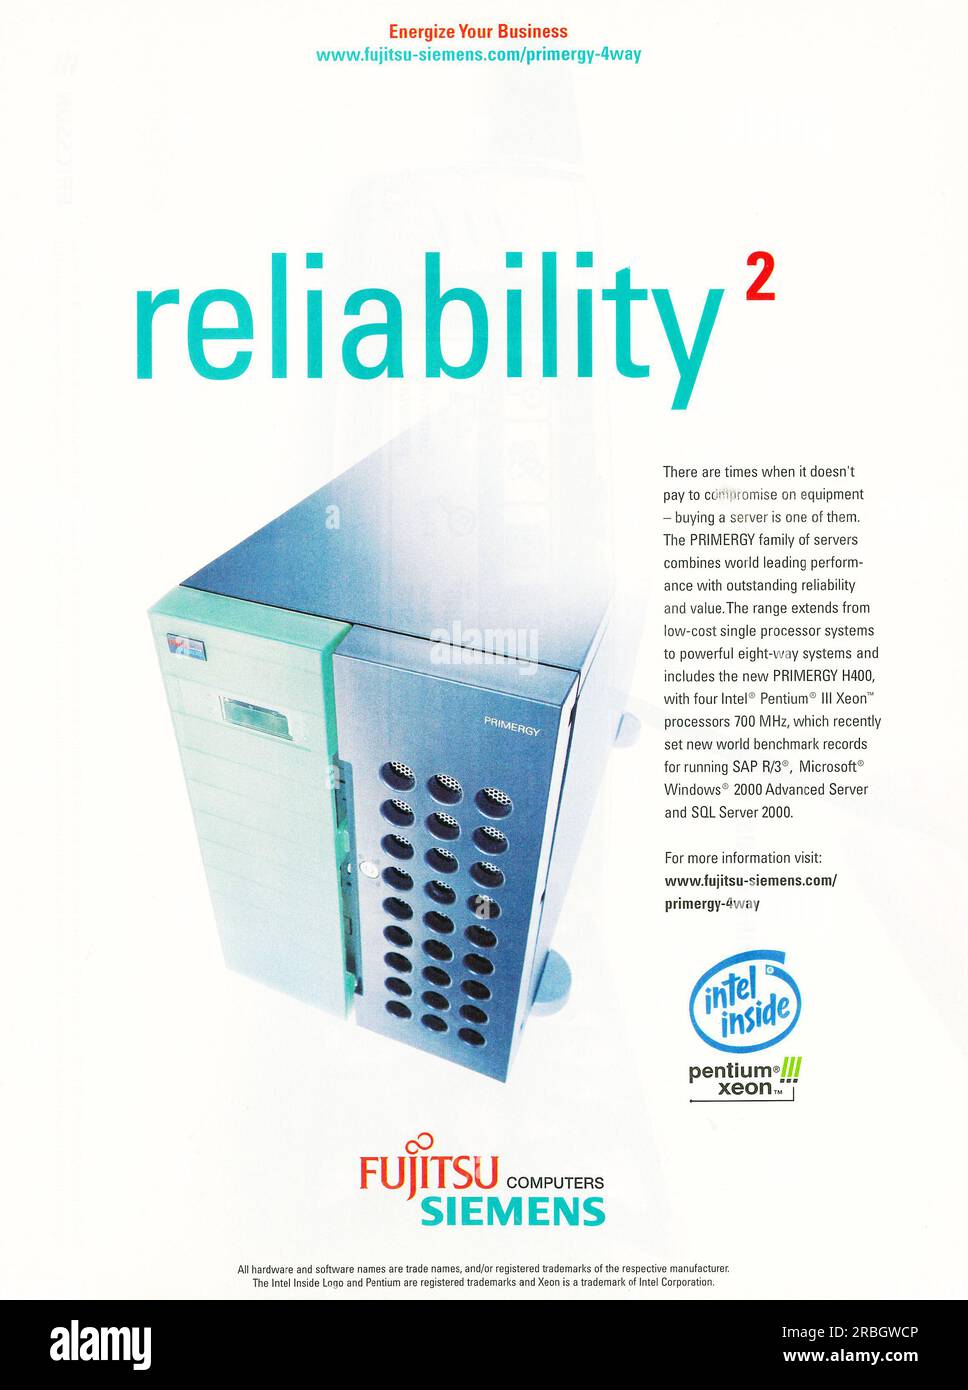 Fujitsu Siemens computers - Intel Inside Pentium Xeon advert advert in a magazine 2001 Stock Photo